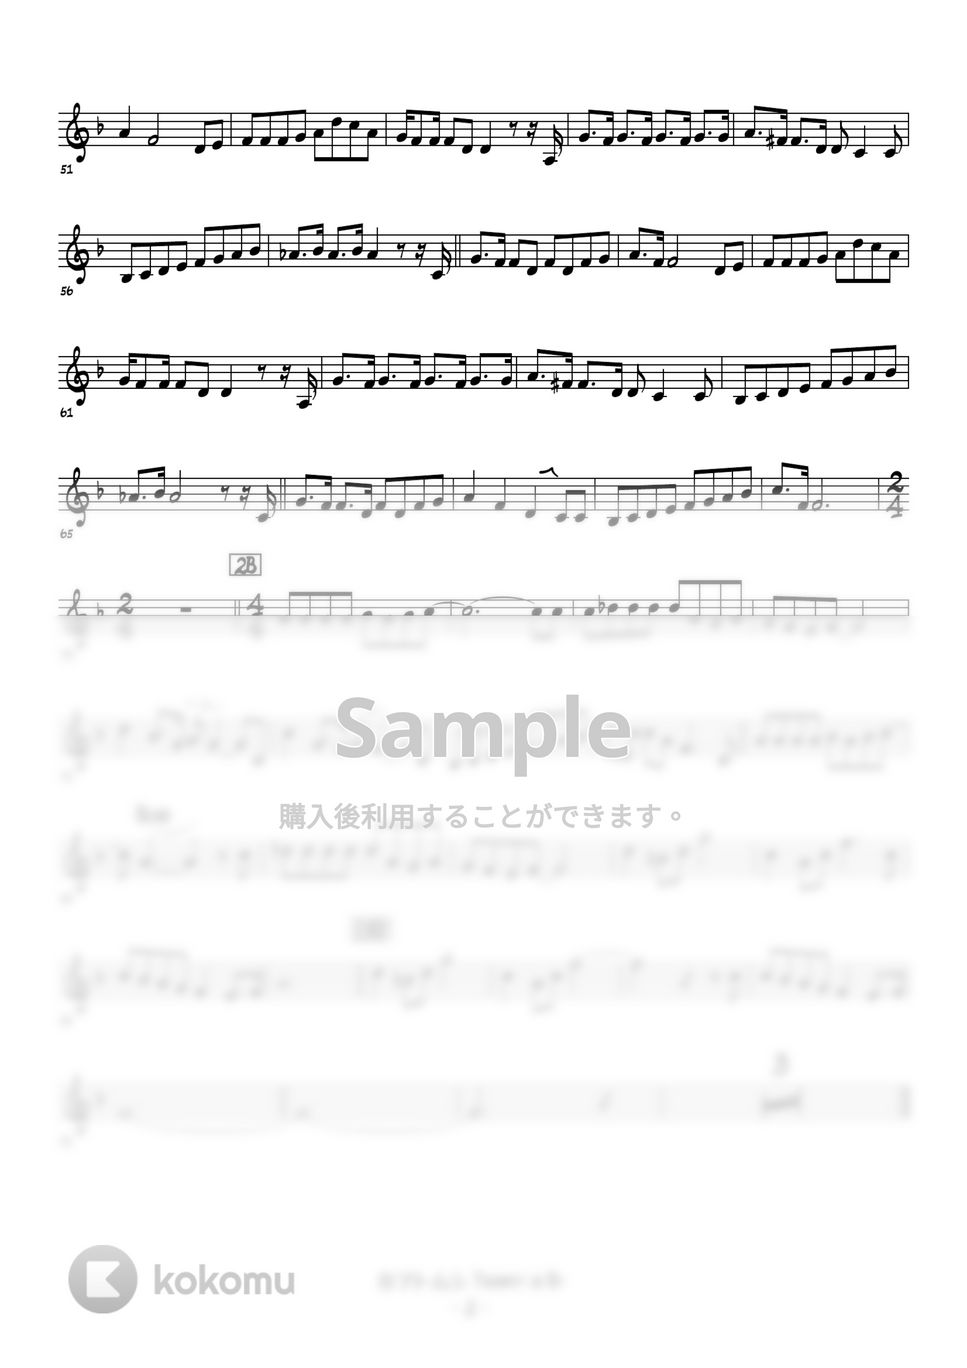 aiko - カブトムシ (トランペットメロディー楽譜) by 高田将利